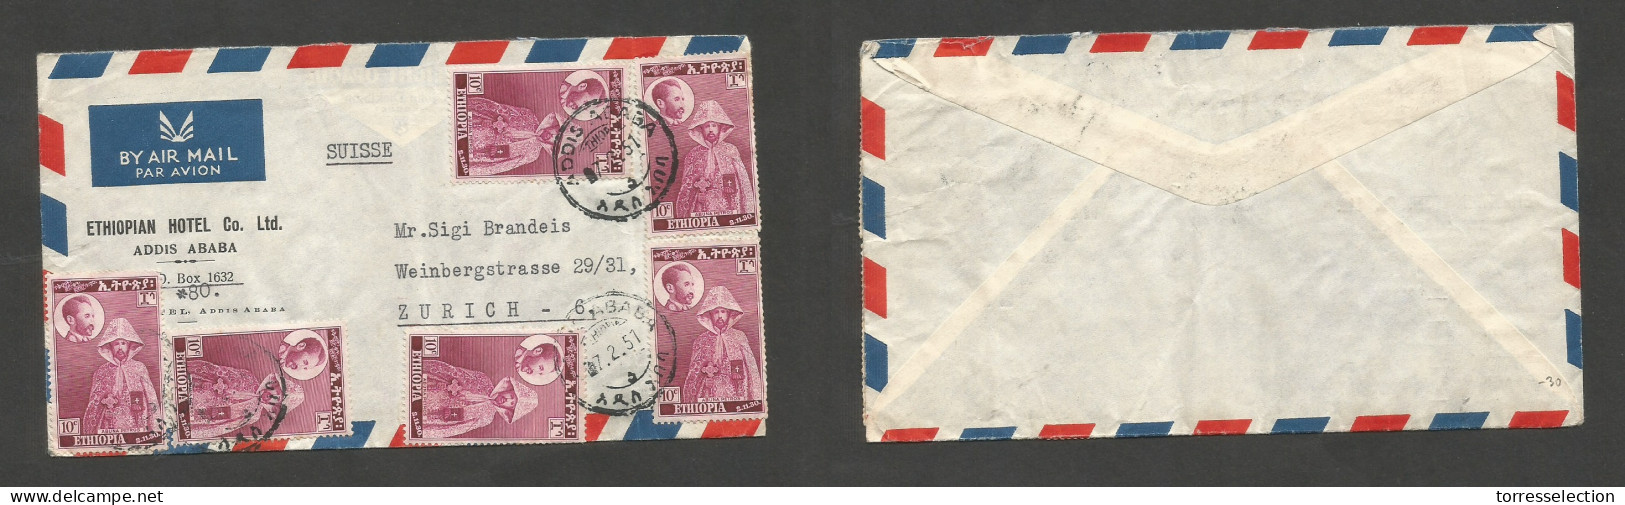 ETHIOPIA. 1951 (7 Febr) Addis Ababa - Zurich, Switzerland. Air Multifkd Env, Tied Cds, At 60c Rate. V. Appealing. SALE. - Ethiopie